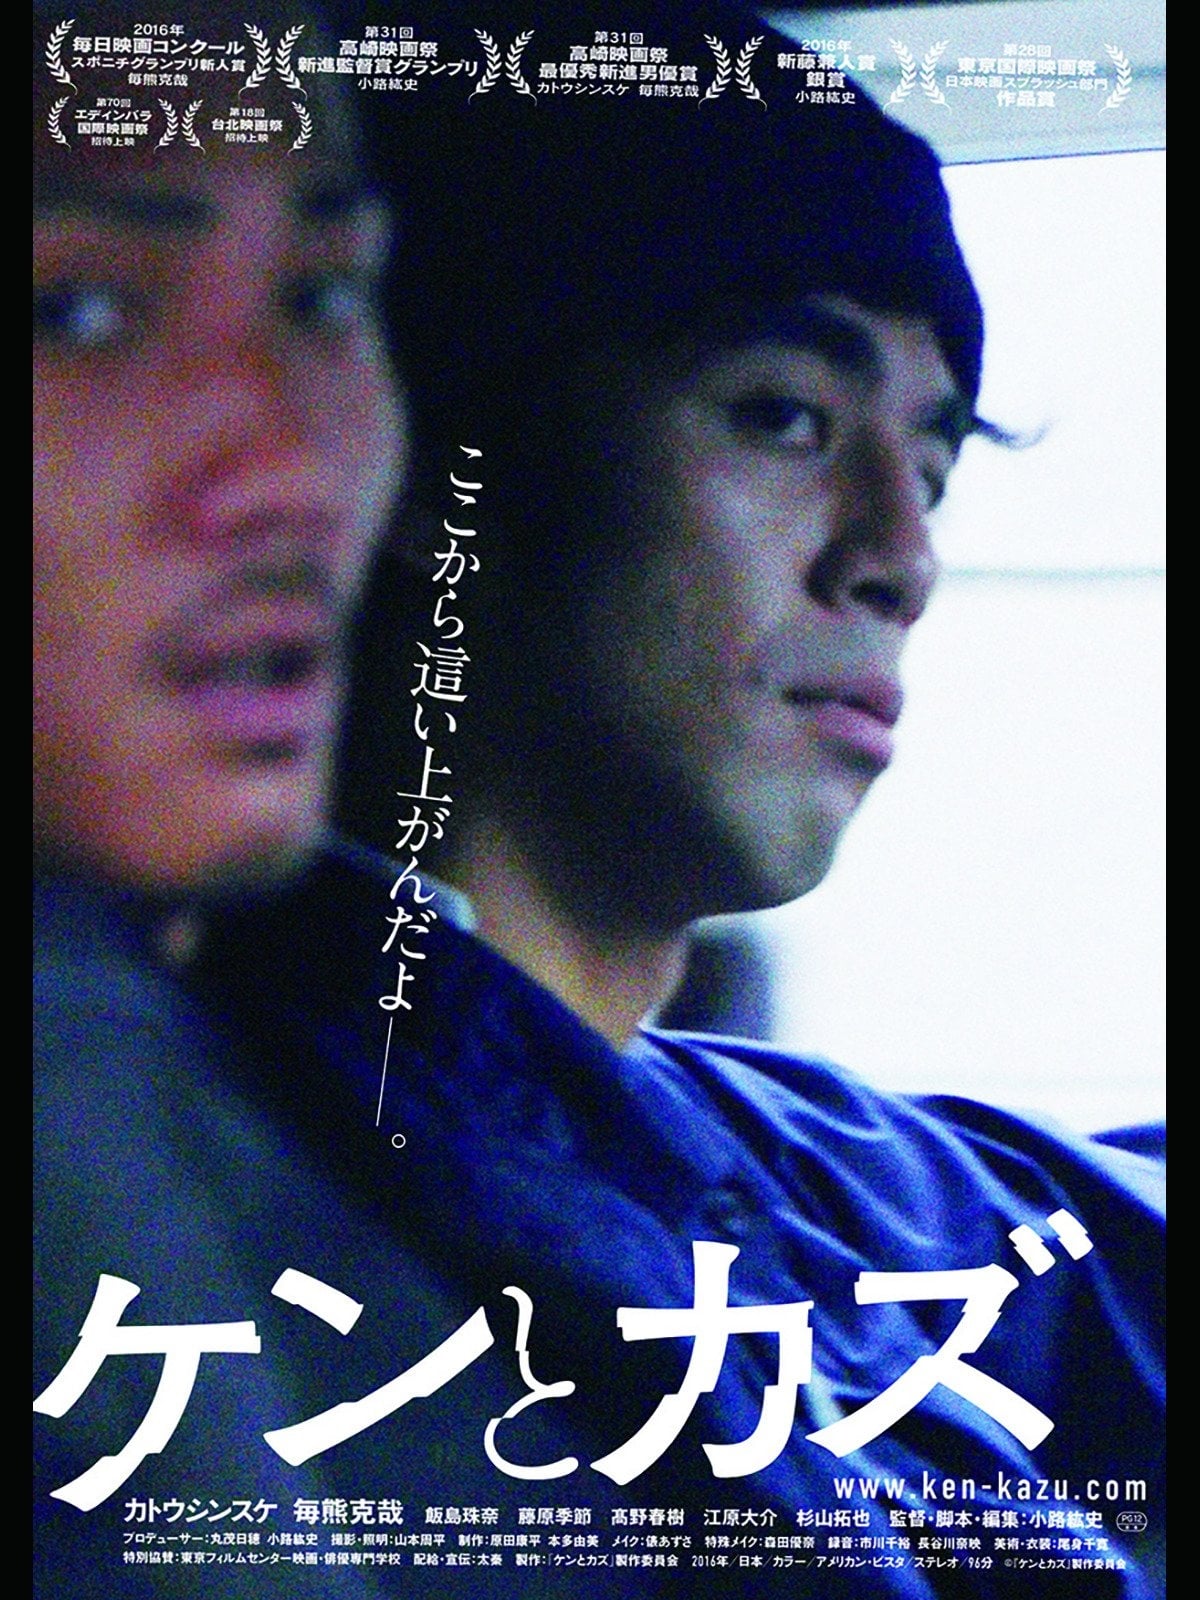 Ken and Kazu (2015)